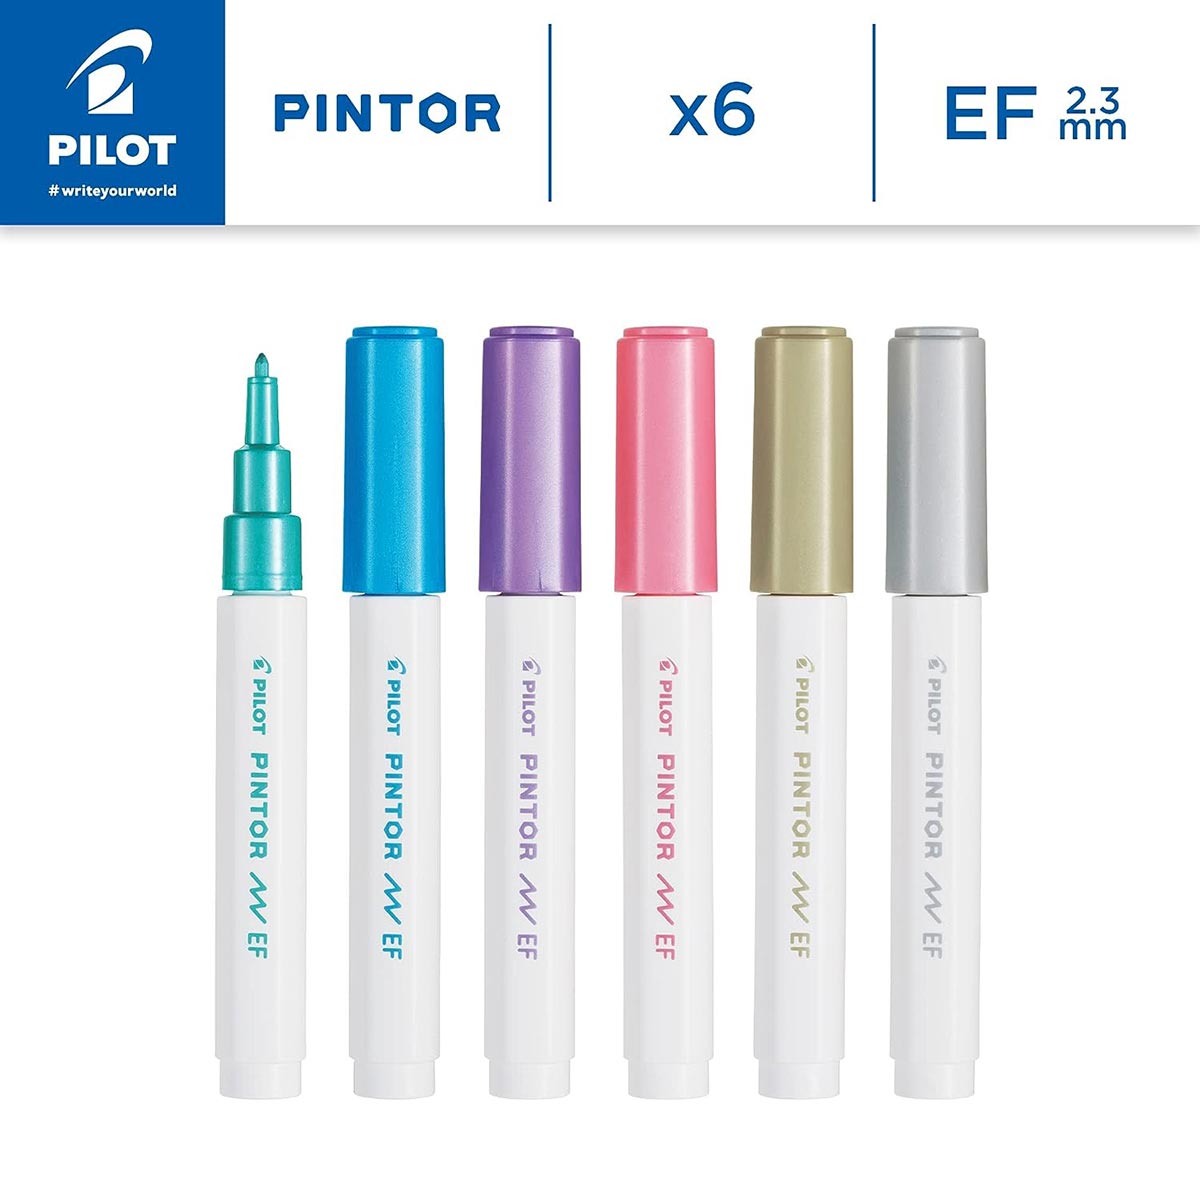 Pintor - Paint Marker Extra Fine Tip 6 Pack - Metallic